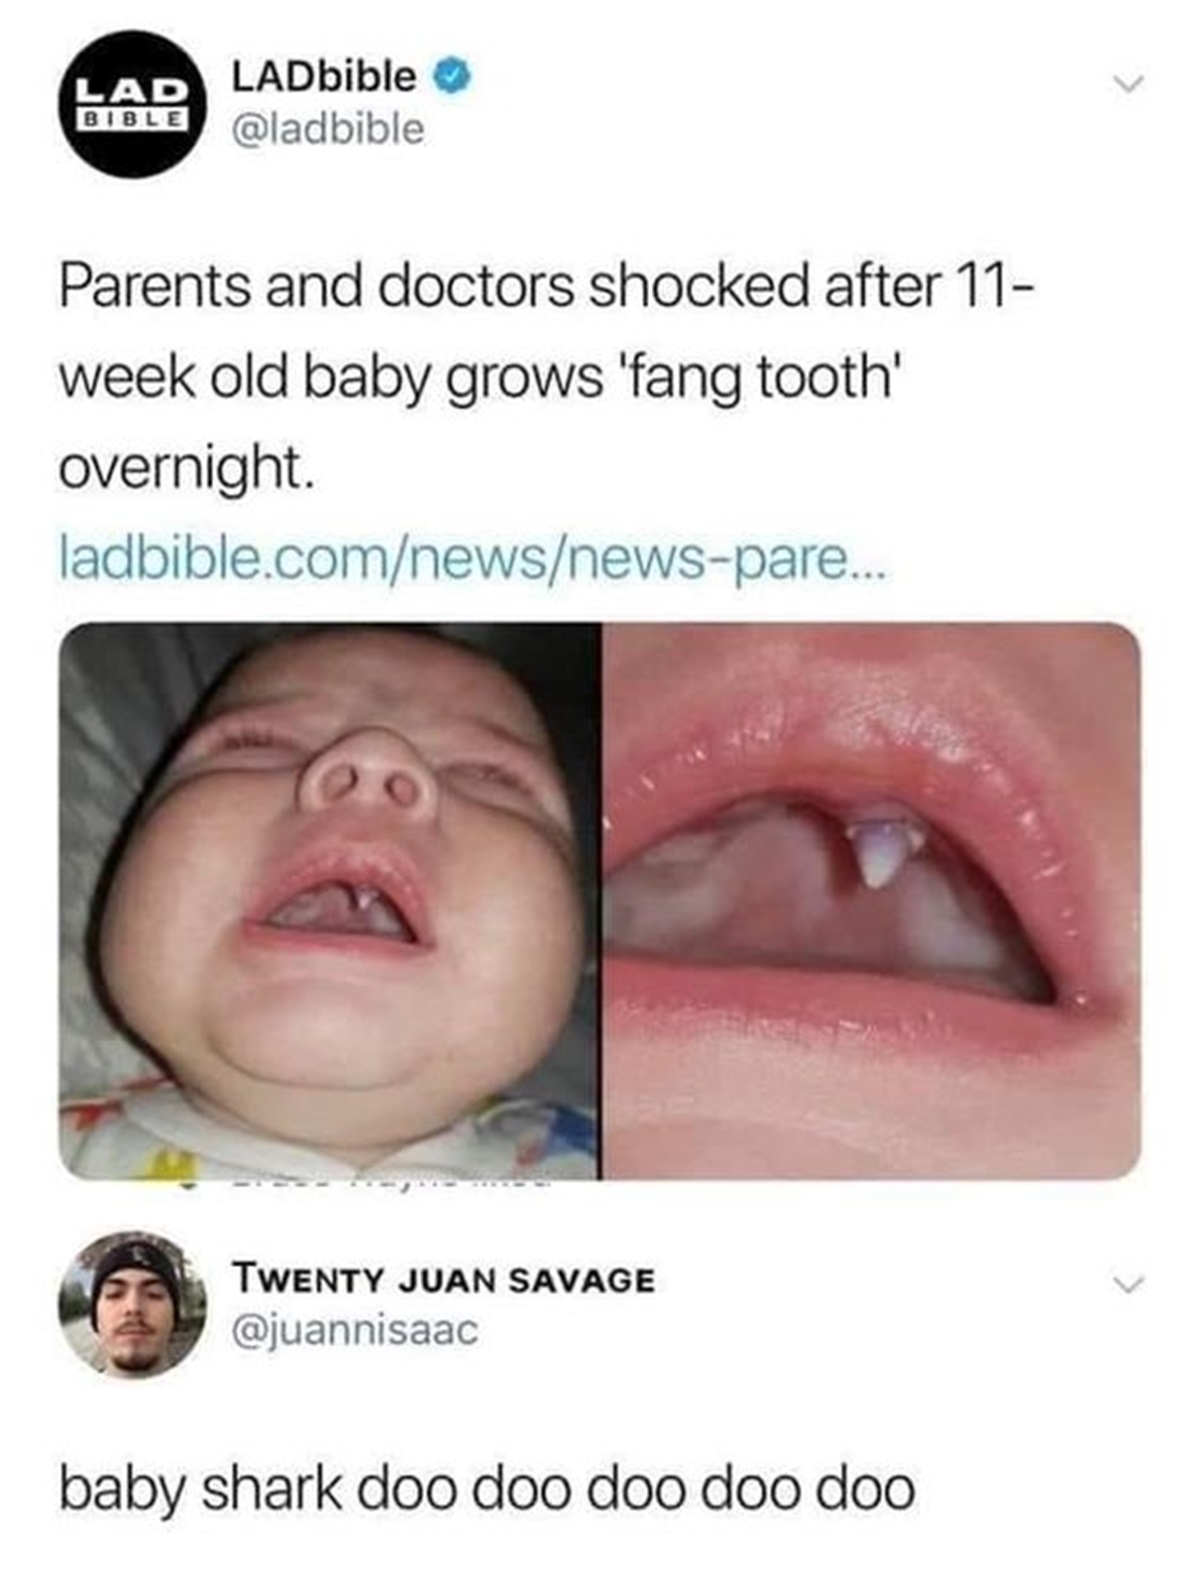 Meme - Lad LADbible Bible Parents and doctors shocked after 11 week old baby grows 'fang tooth' overnight. ladbible.comnewsnewspare... Twenty Juan Savage baby shark doo doo doo doo doo L